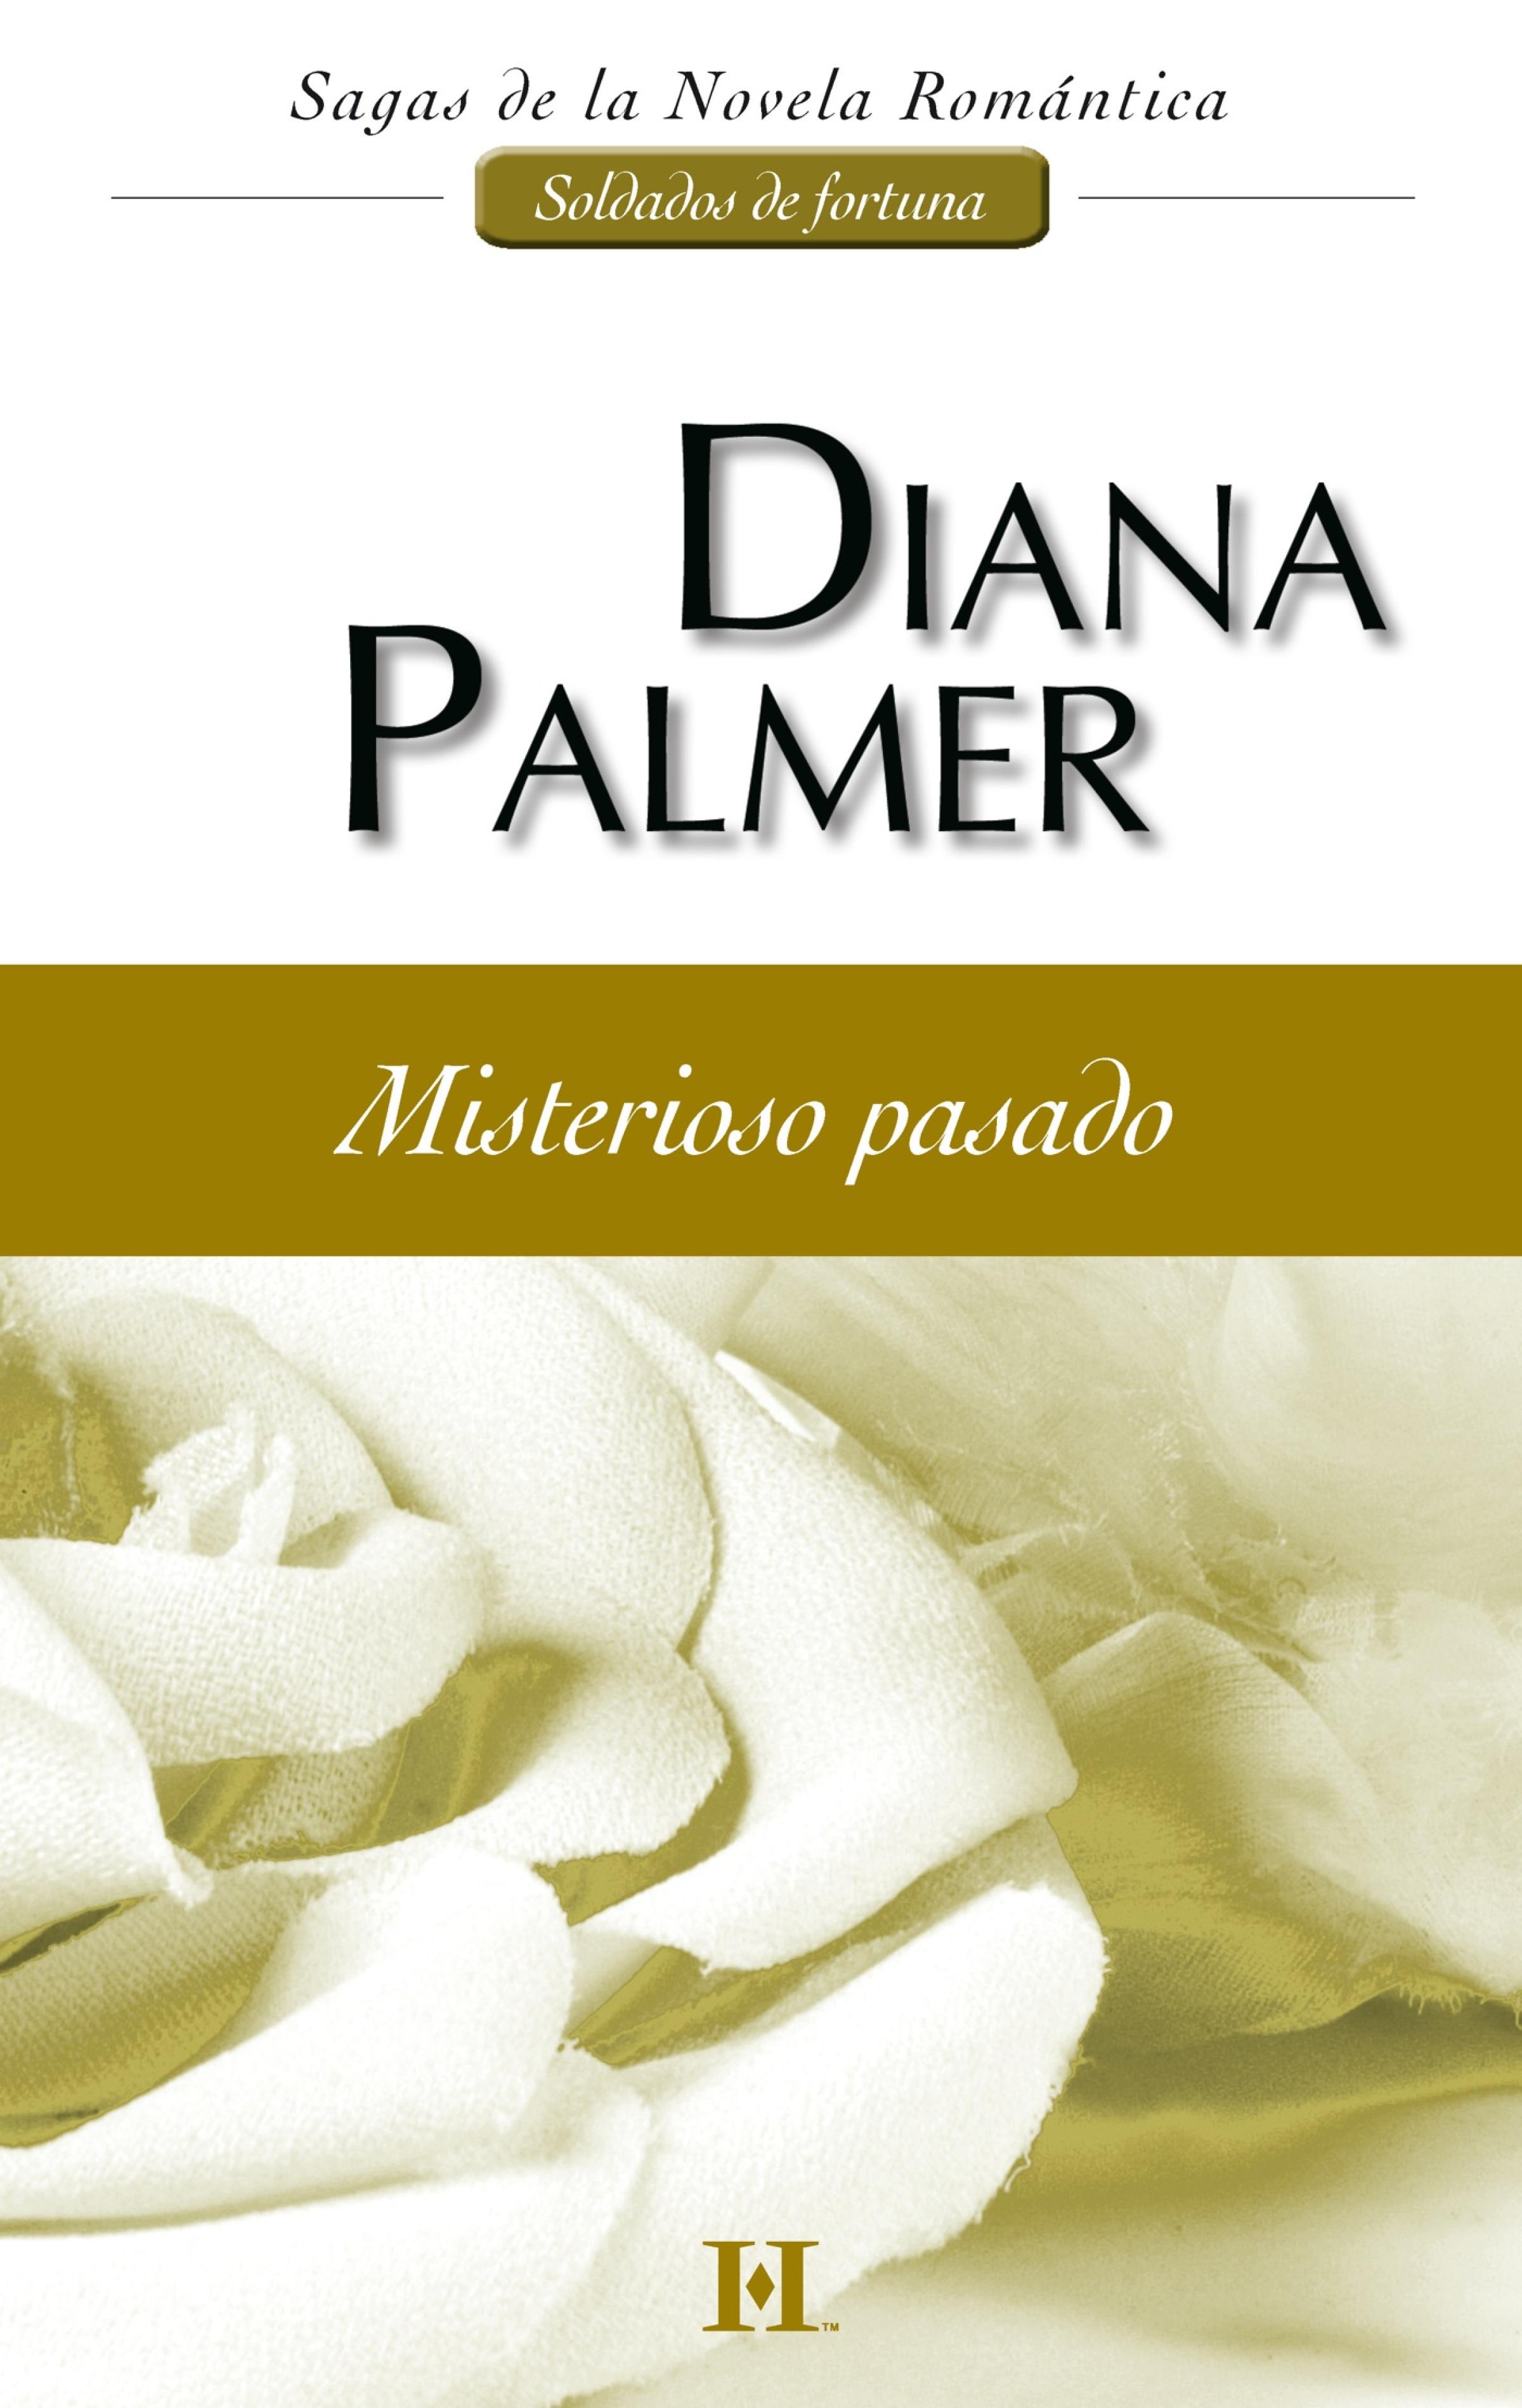 Diana Palmer Misterioso pasado